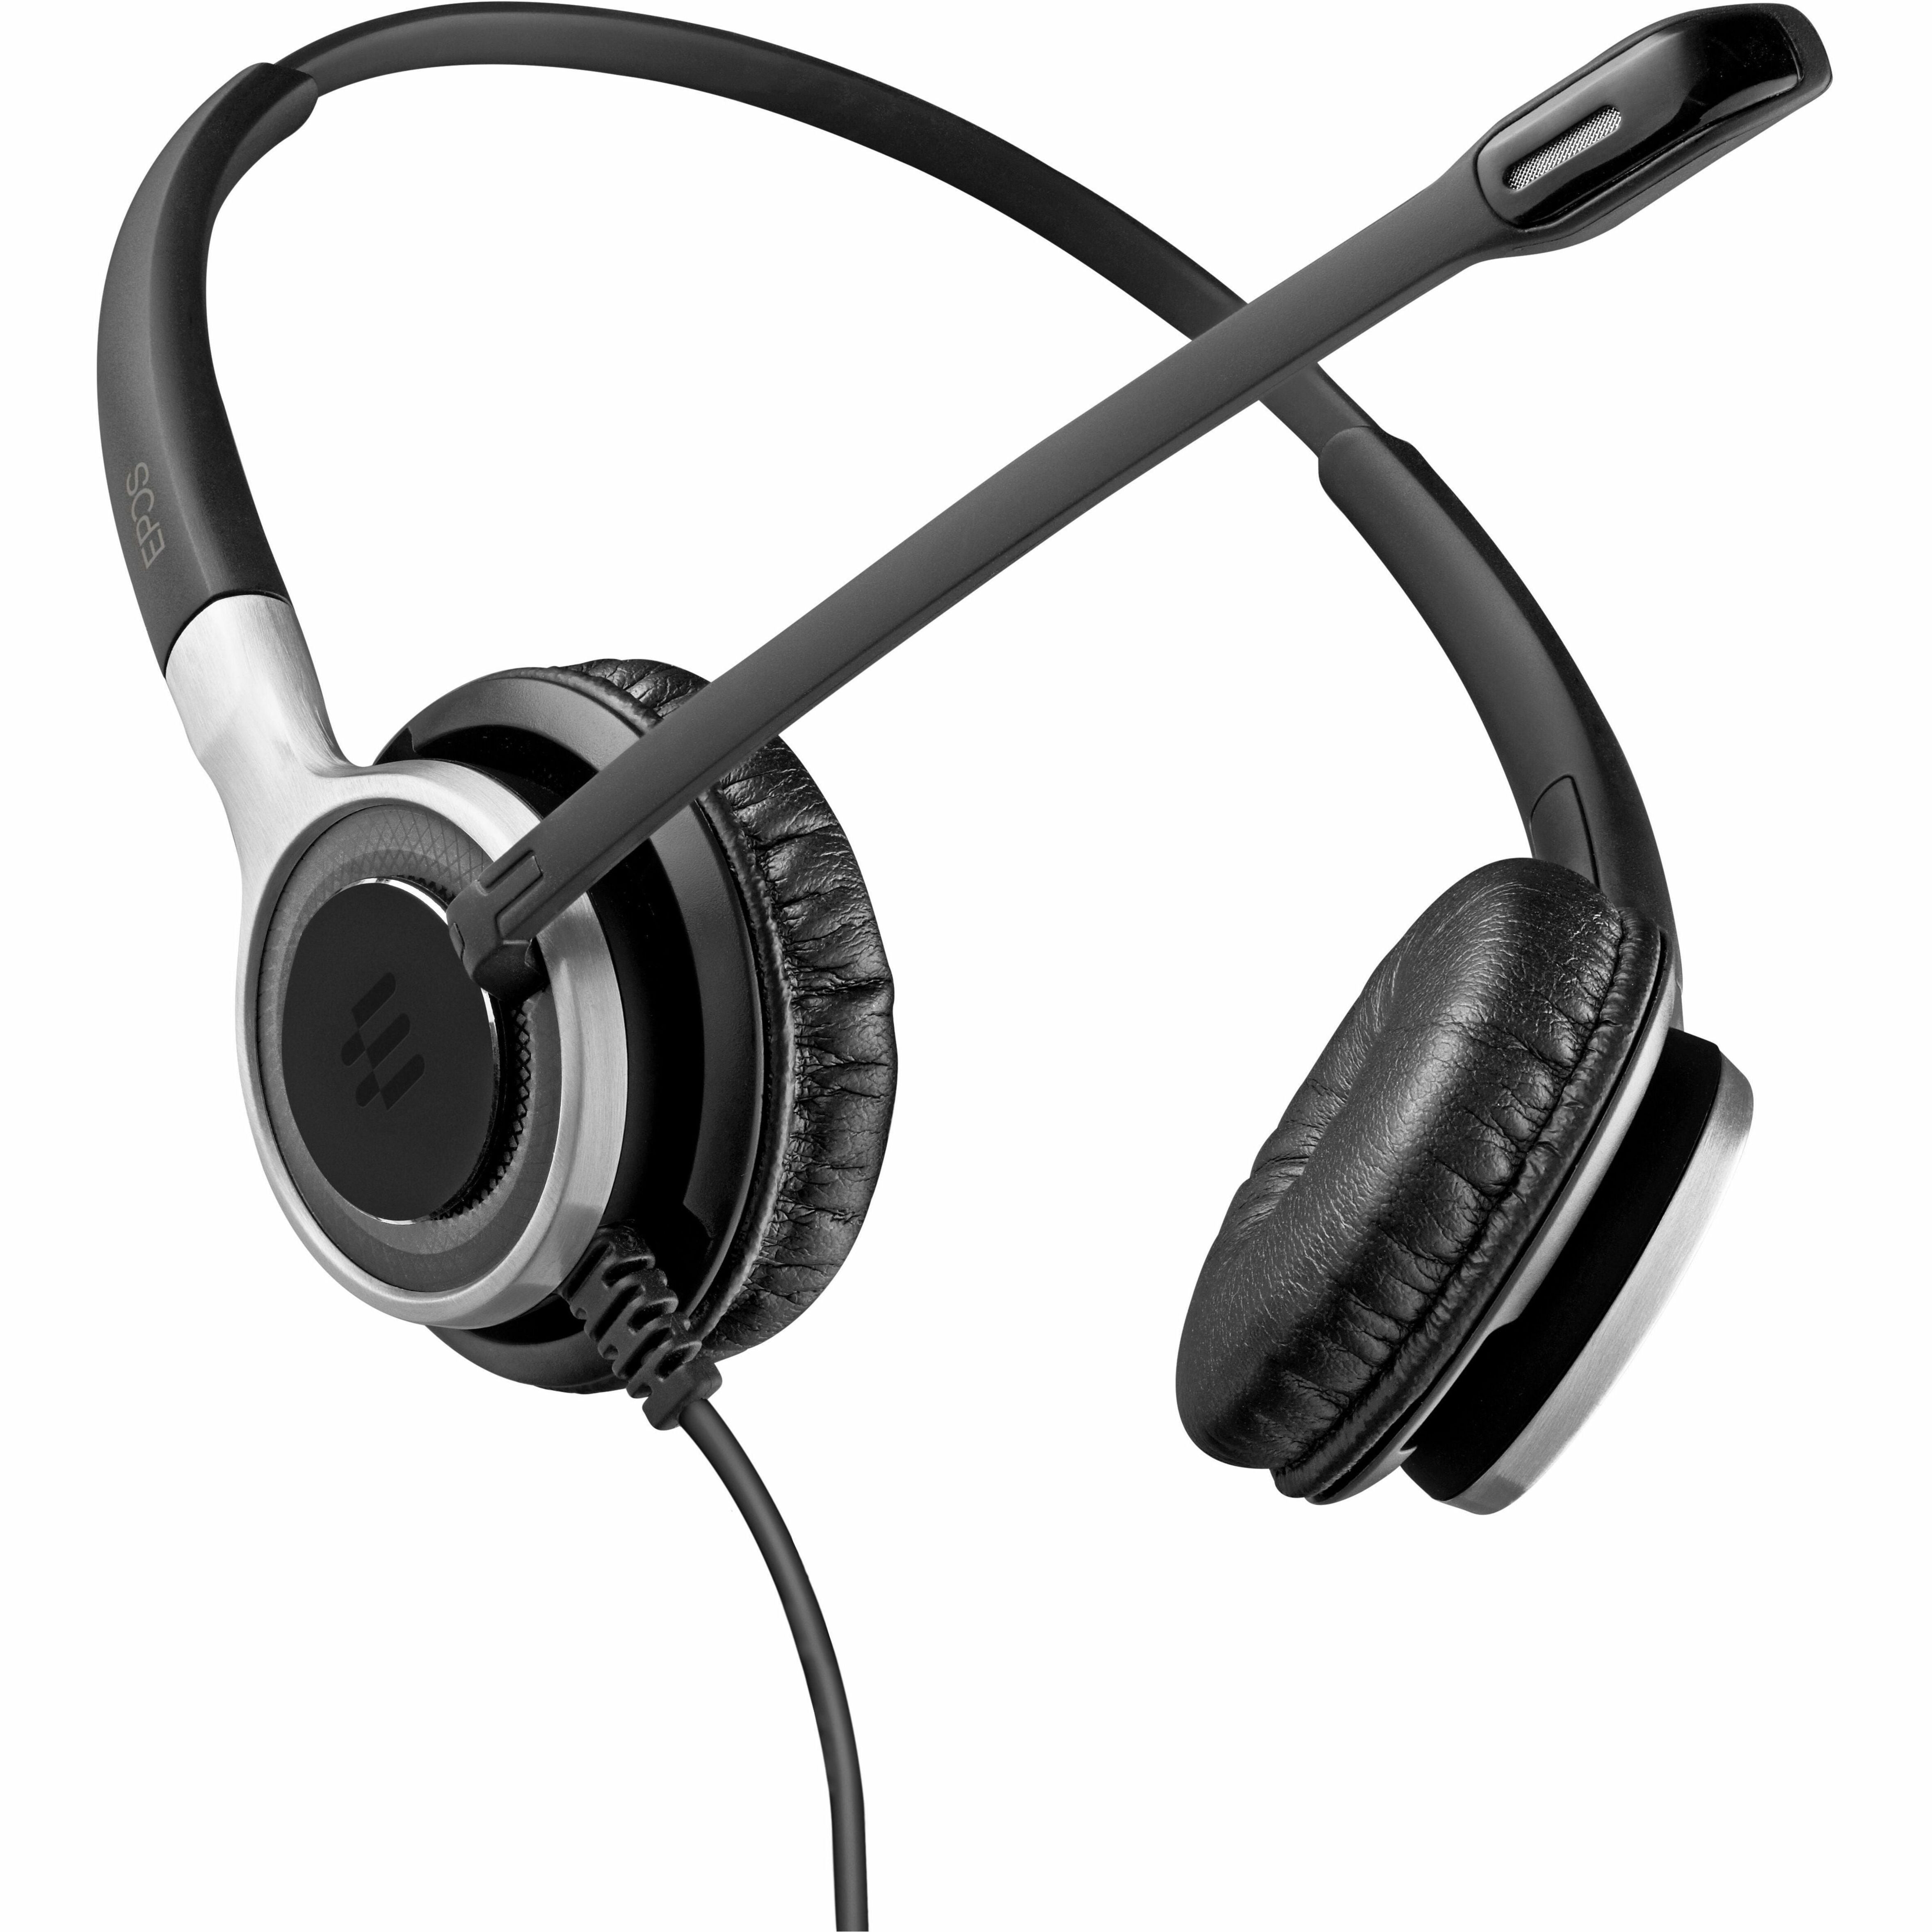 EPOS | SENNHEISER EPOS IMPACT SC 665 USB On-Ear Headset - Noise Canceling Black/Silver [Discontinued]